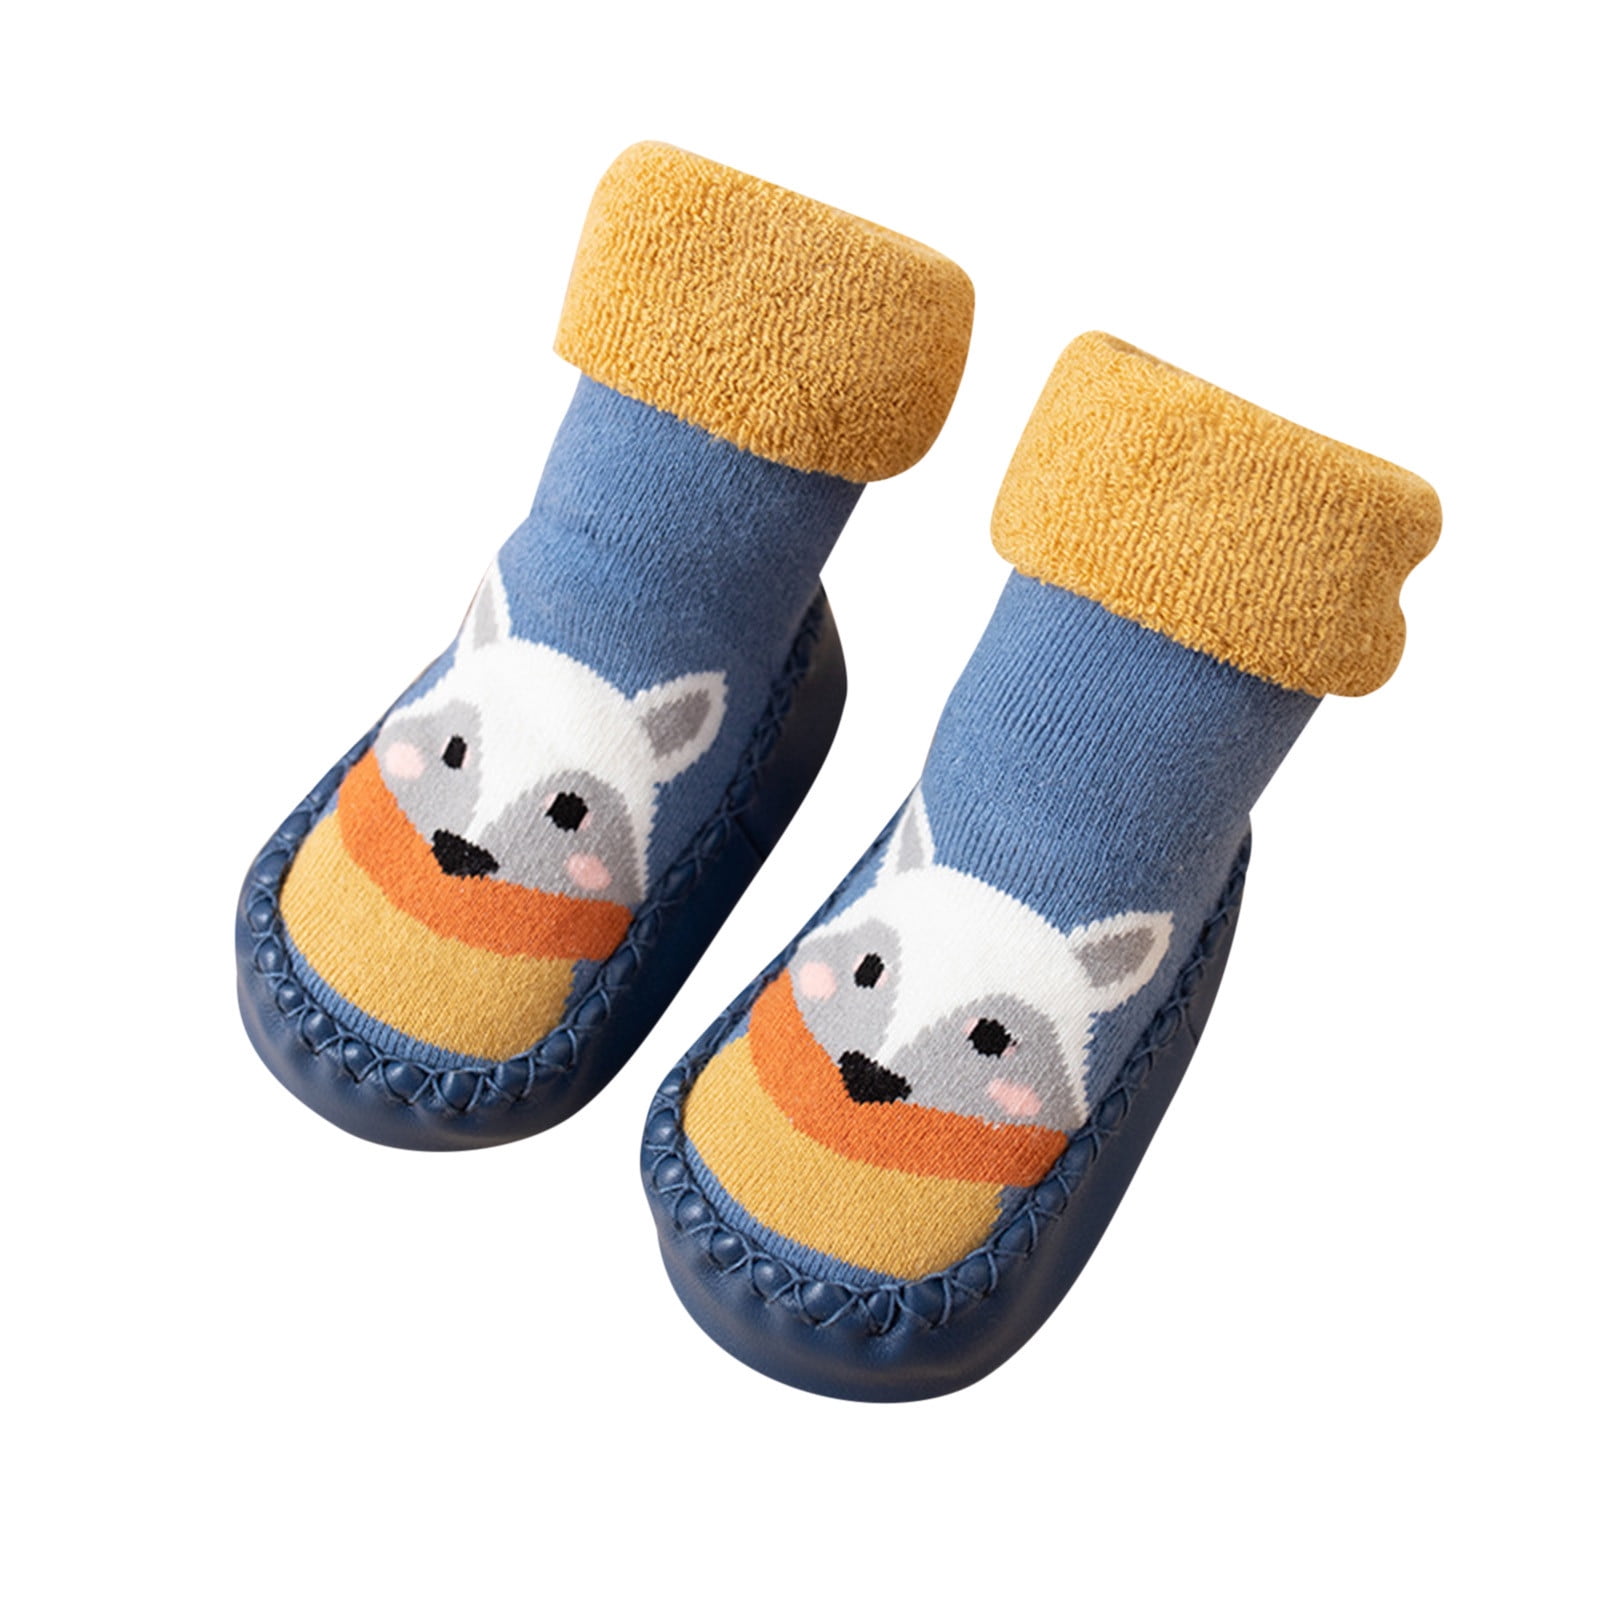 JDEFEG Toddler Size 11 Shoes Boys Winter Baby Floor Socks Shoes